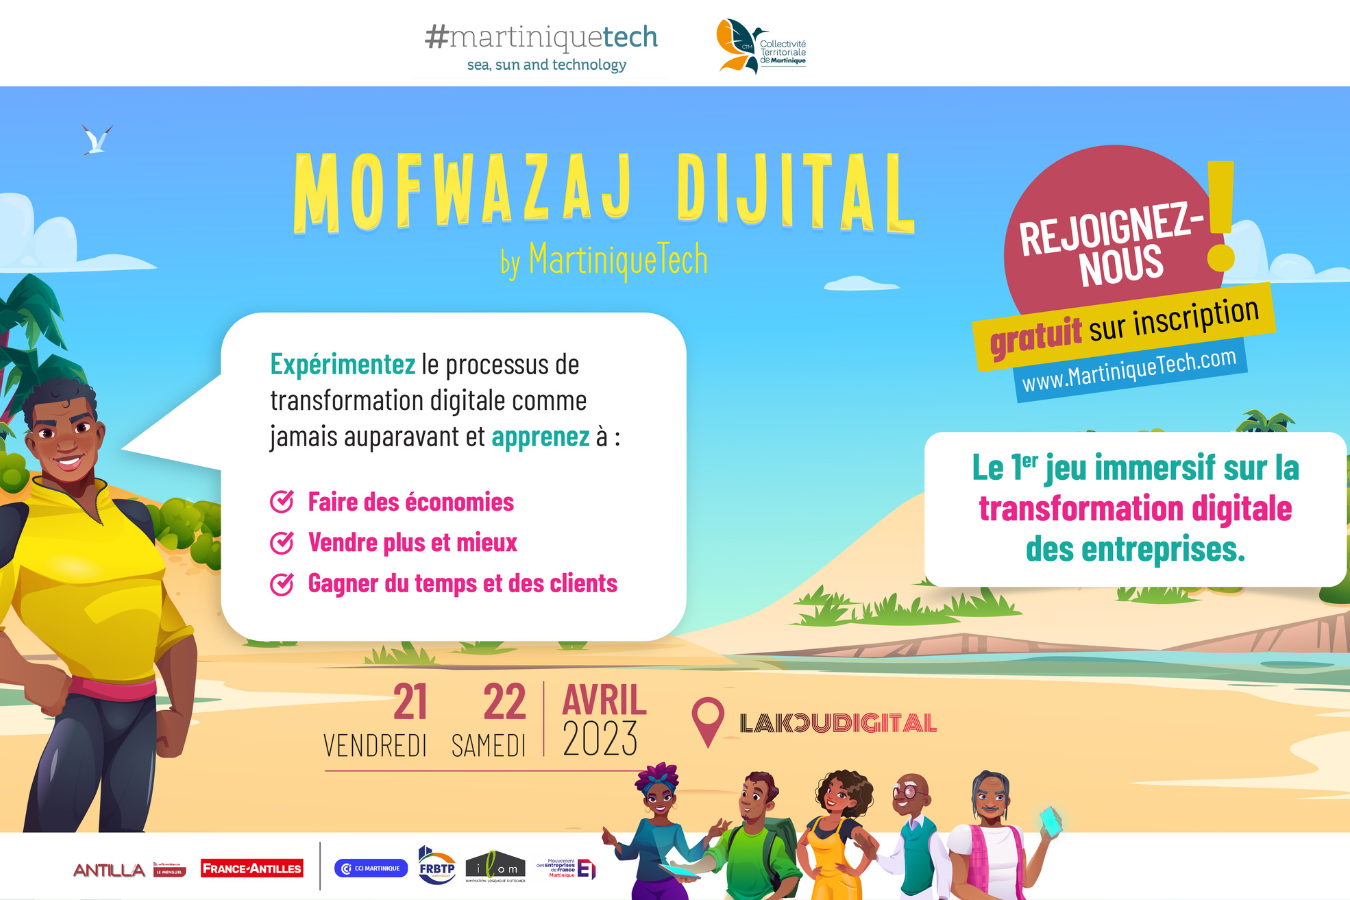 MOFWAZAJ DIJITAL by MartiniqueTech